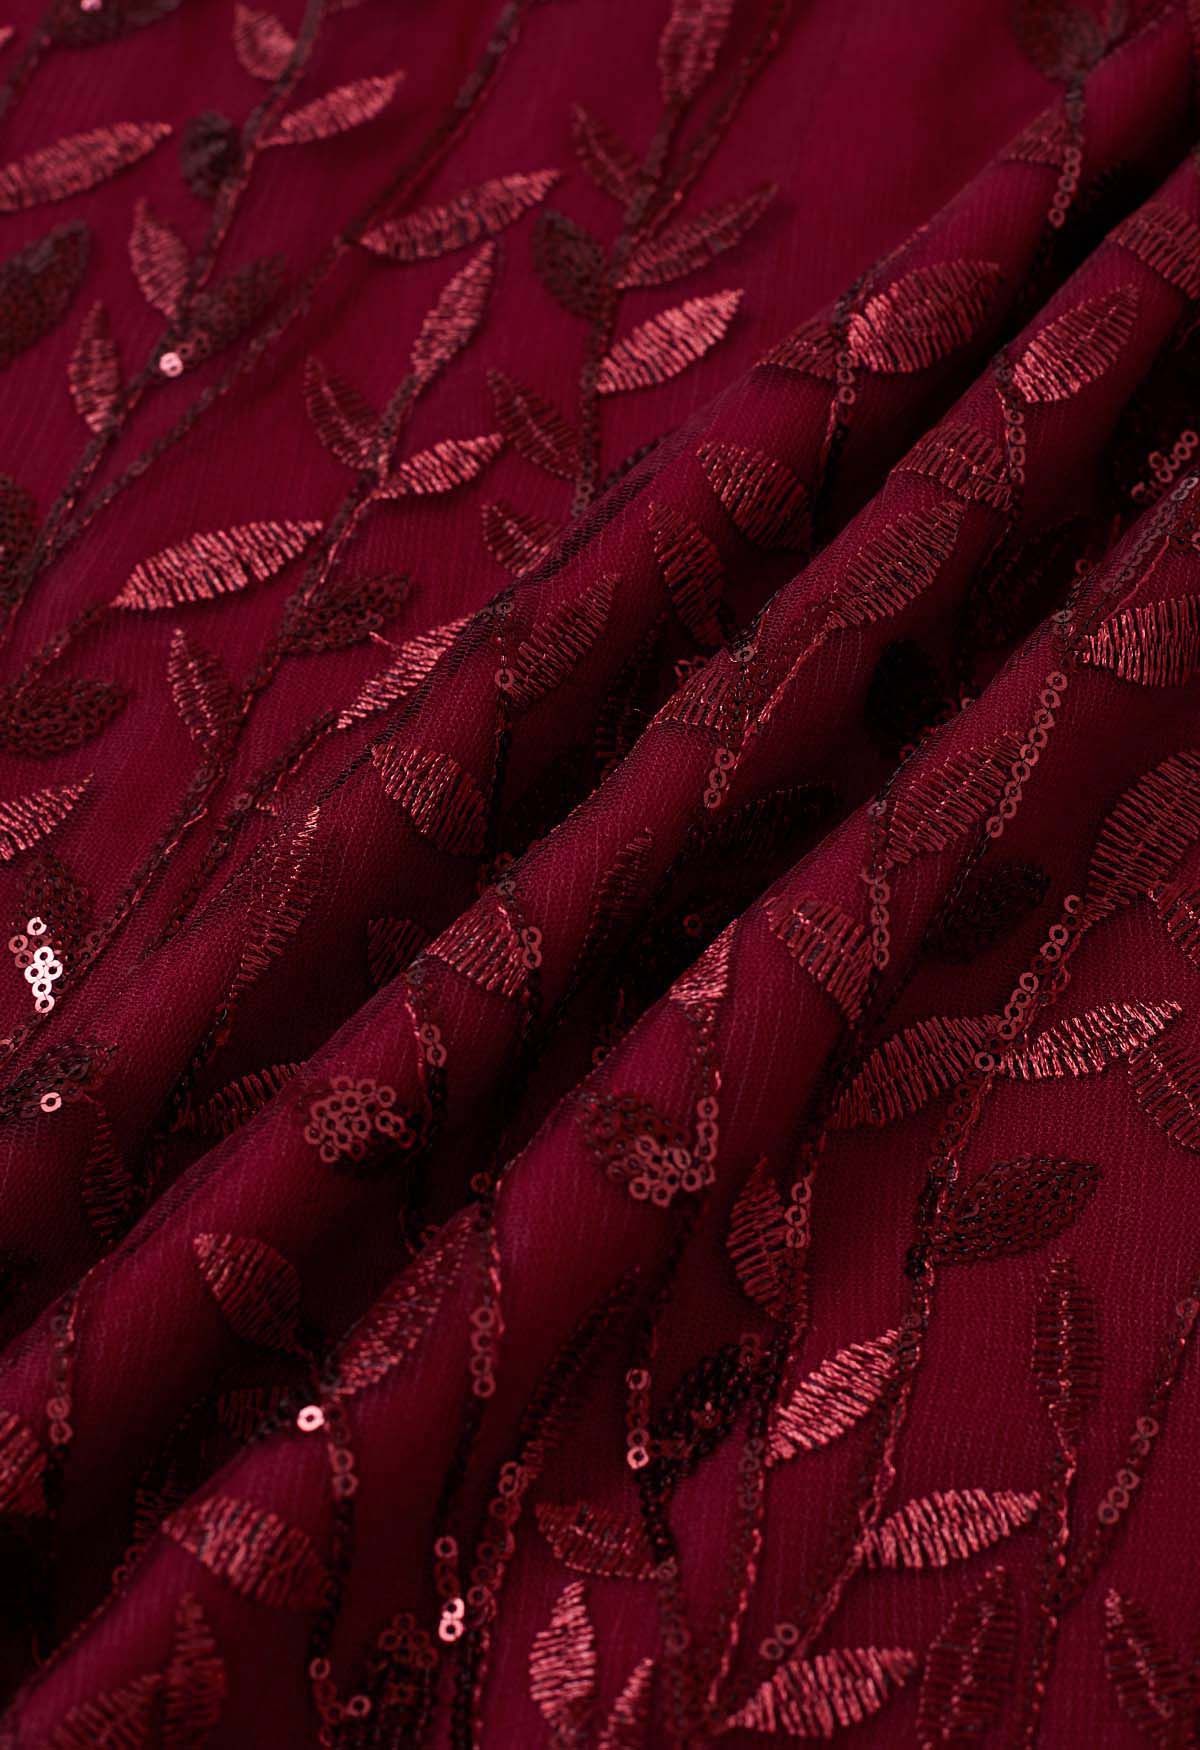 Sequin Embroidered Leaves Mesh Tulle Midi Skirt in Burgundy